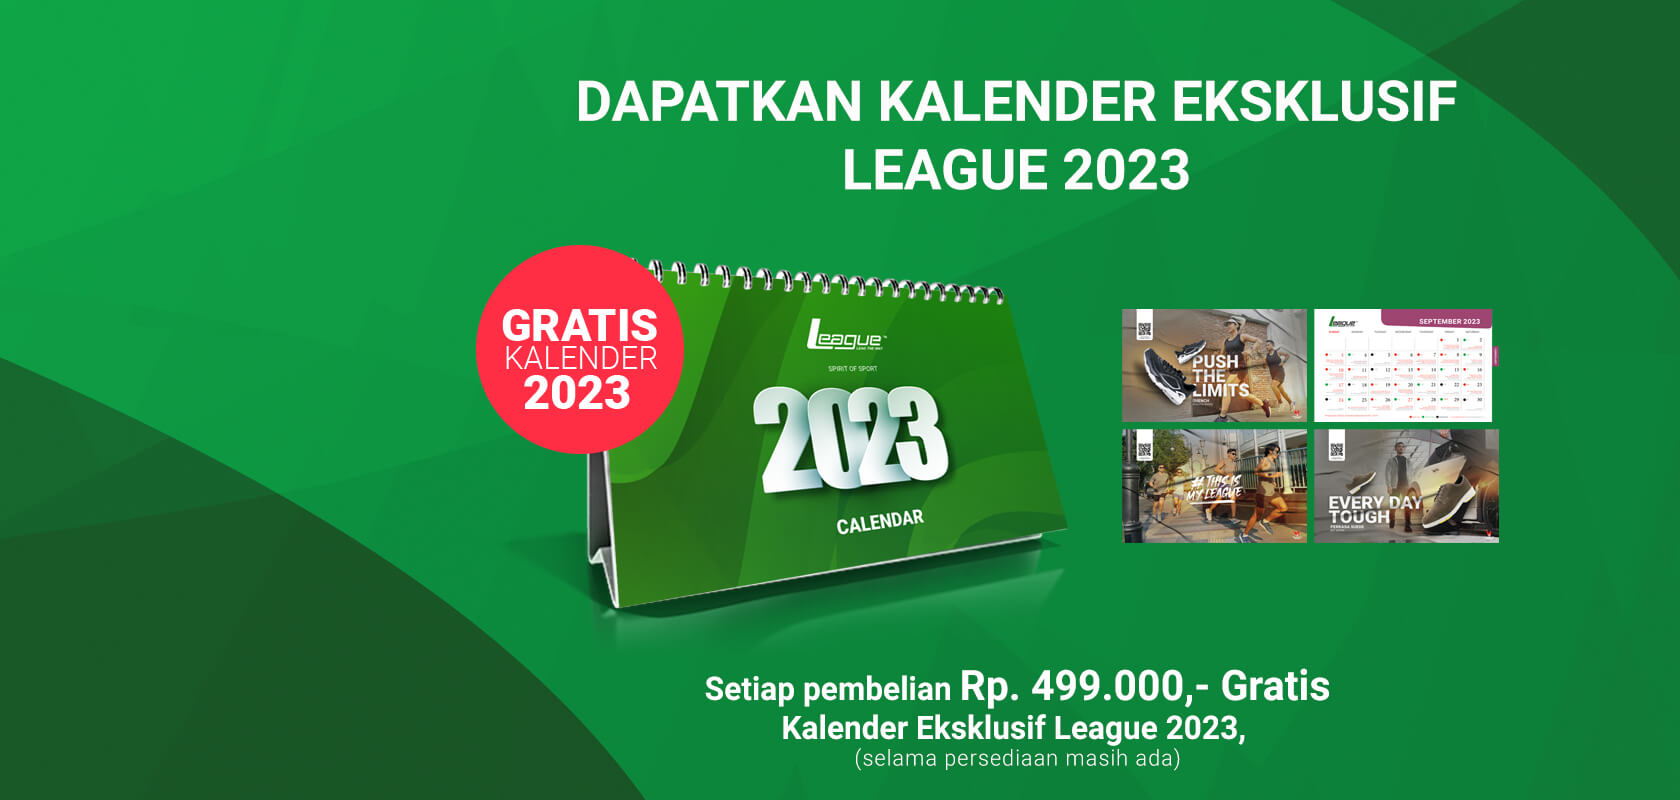 League | Eksklusif Calendar League 2023